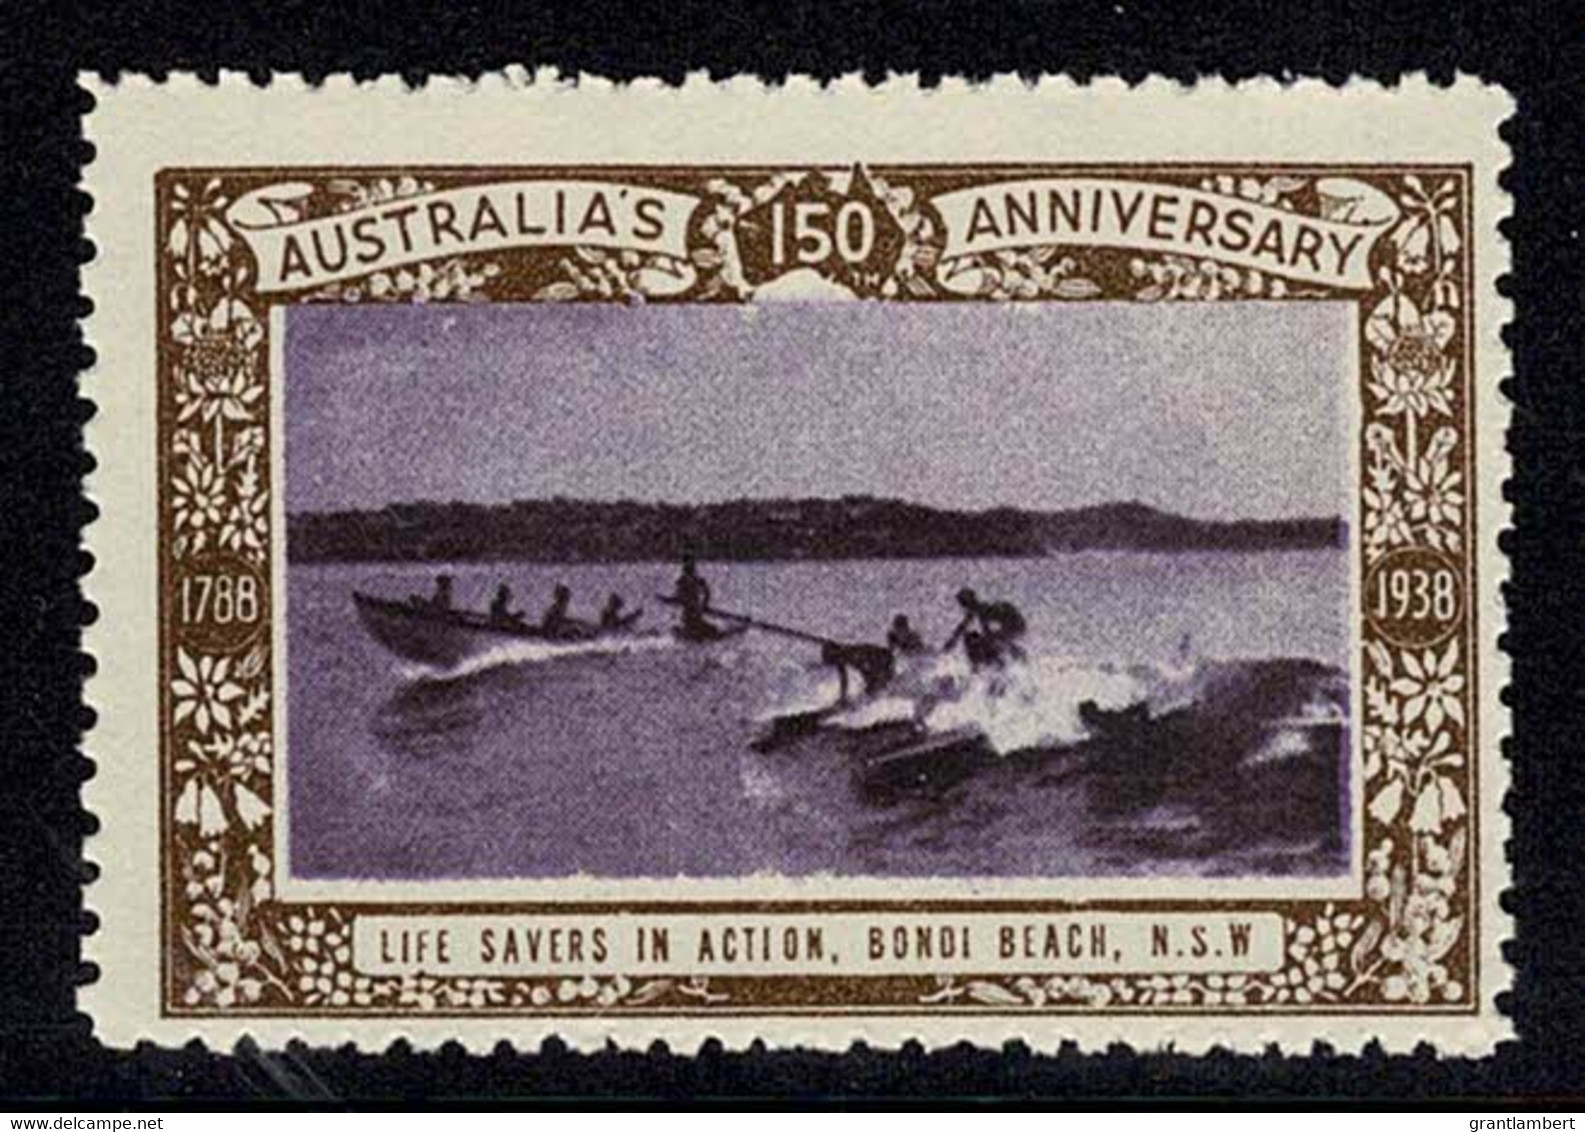 Australia 1938 Life Savers, Bondi Beach - NSW 150th Anniversary Cinderella MNH - Cinderellas